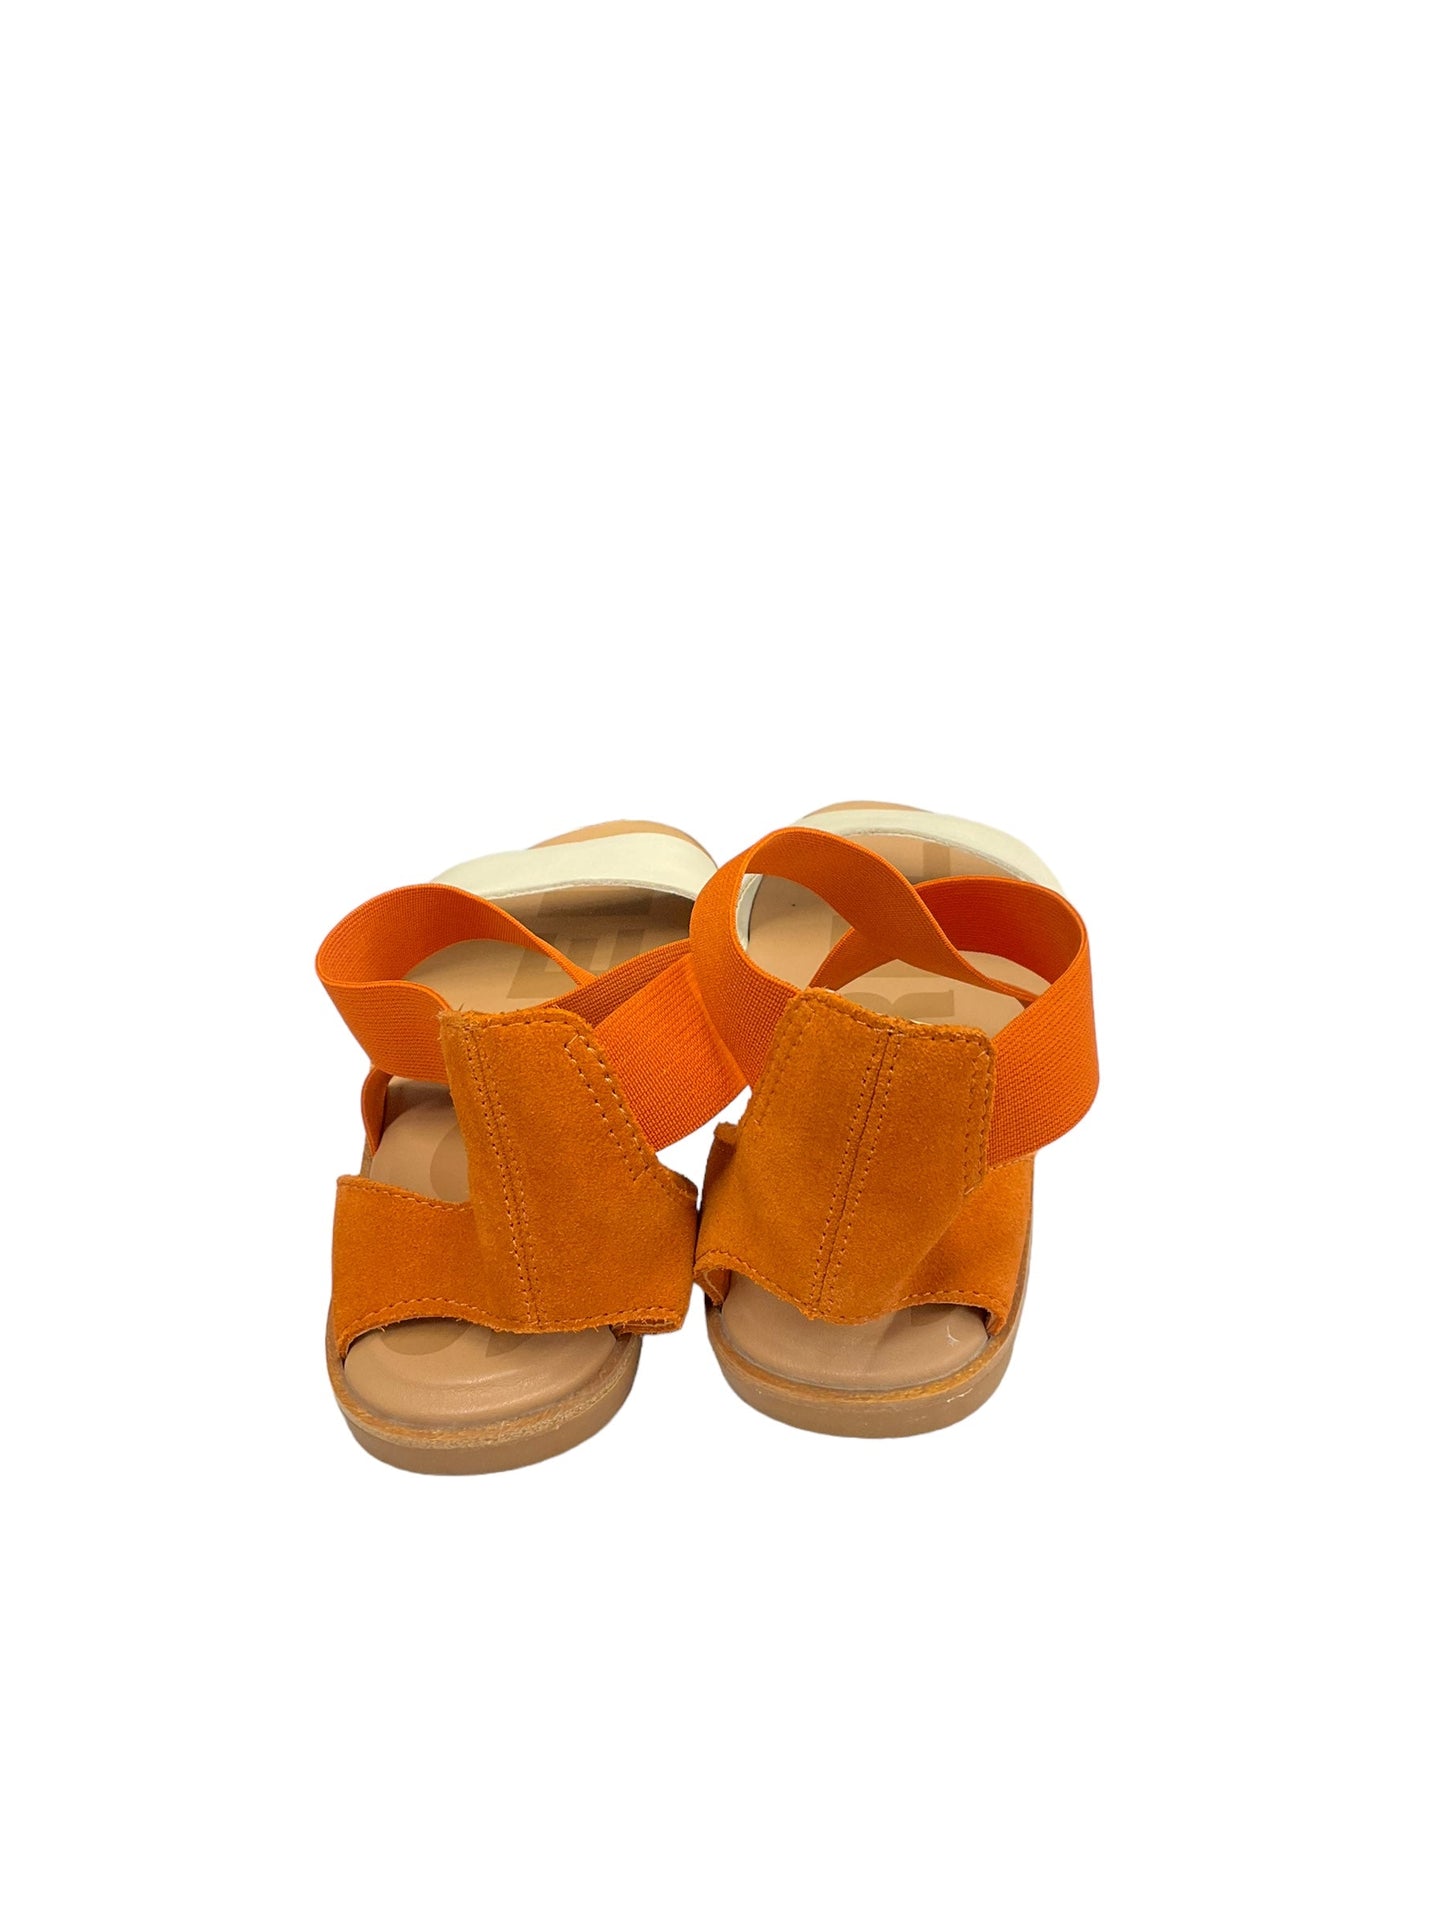 Orange & White Sandals Flats Sorel, Size 8